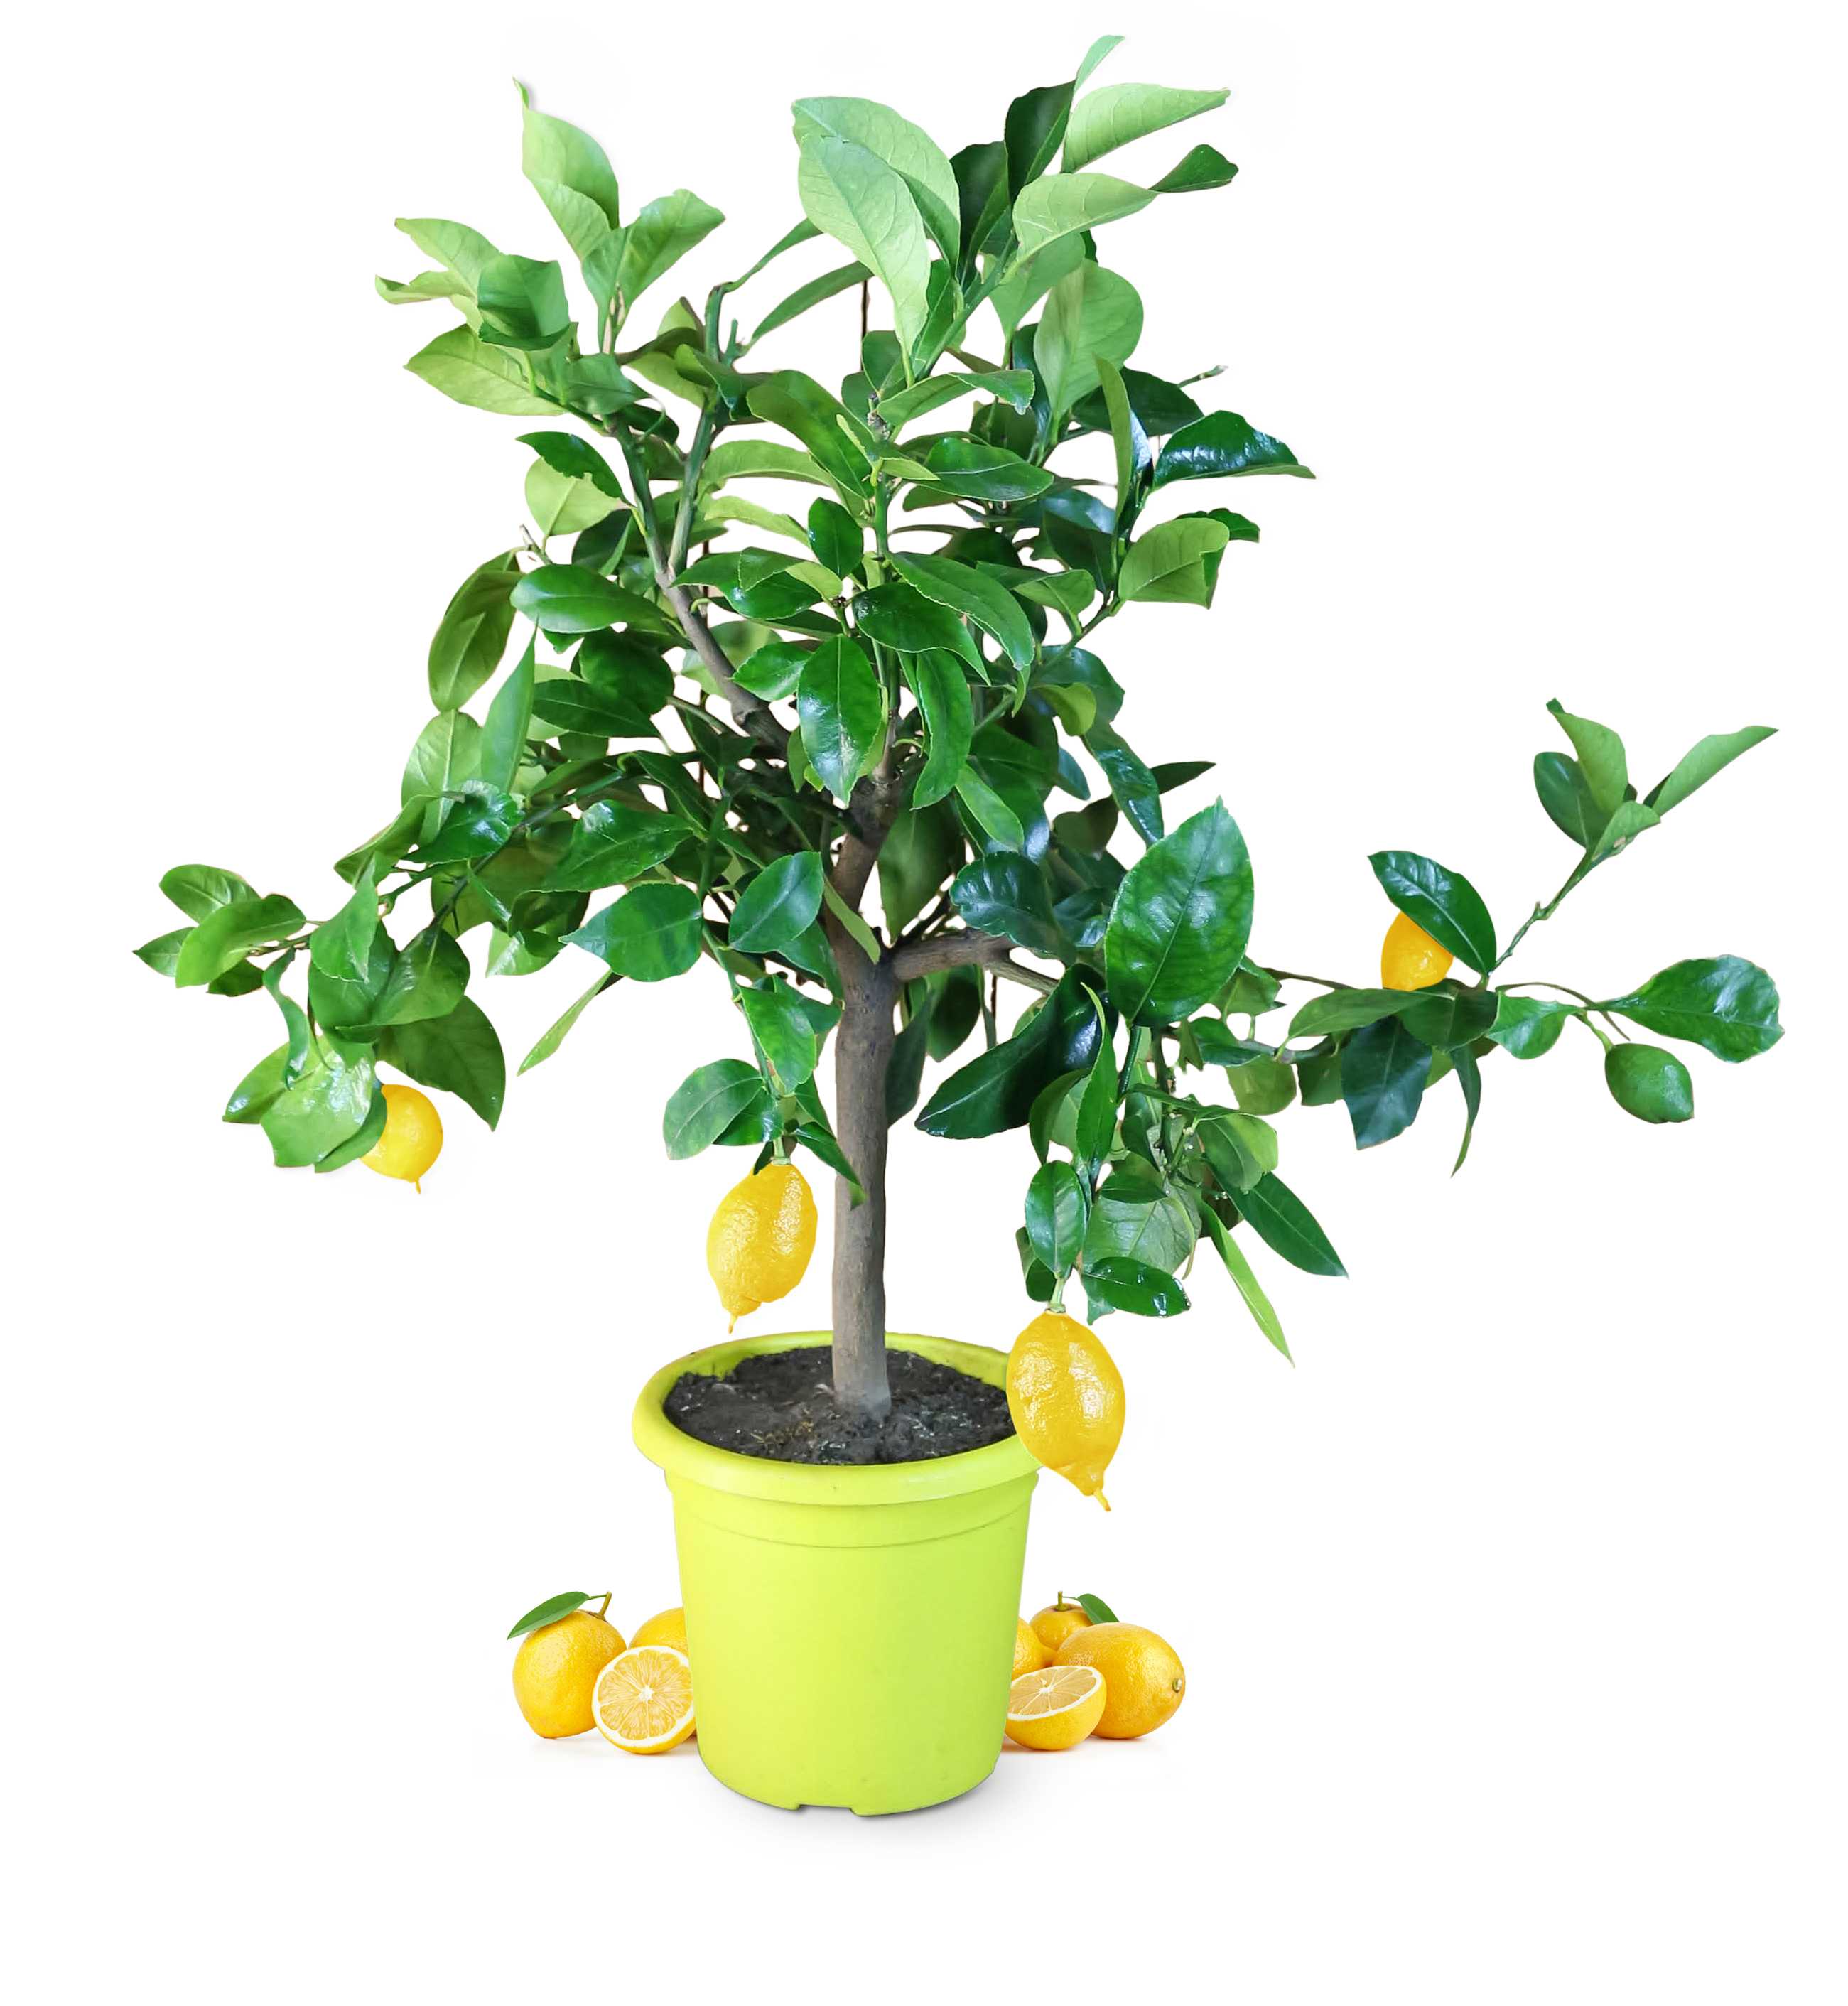 Zitronenbaum [Piccolo]  - Citrus limon - echte Zitrone